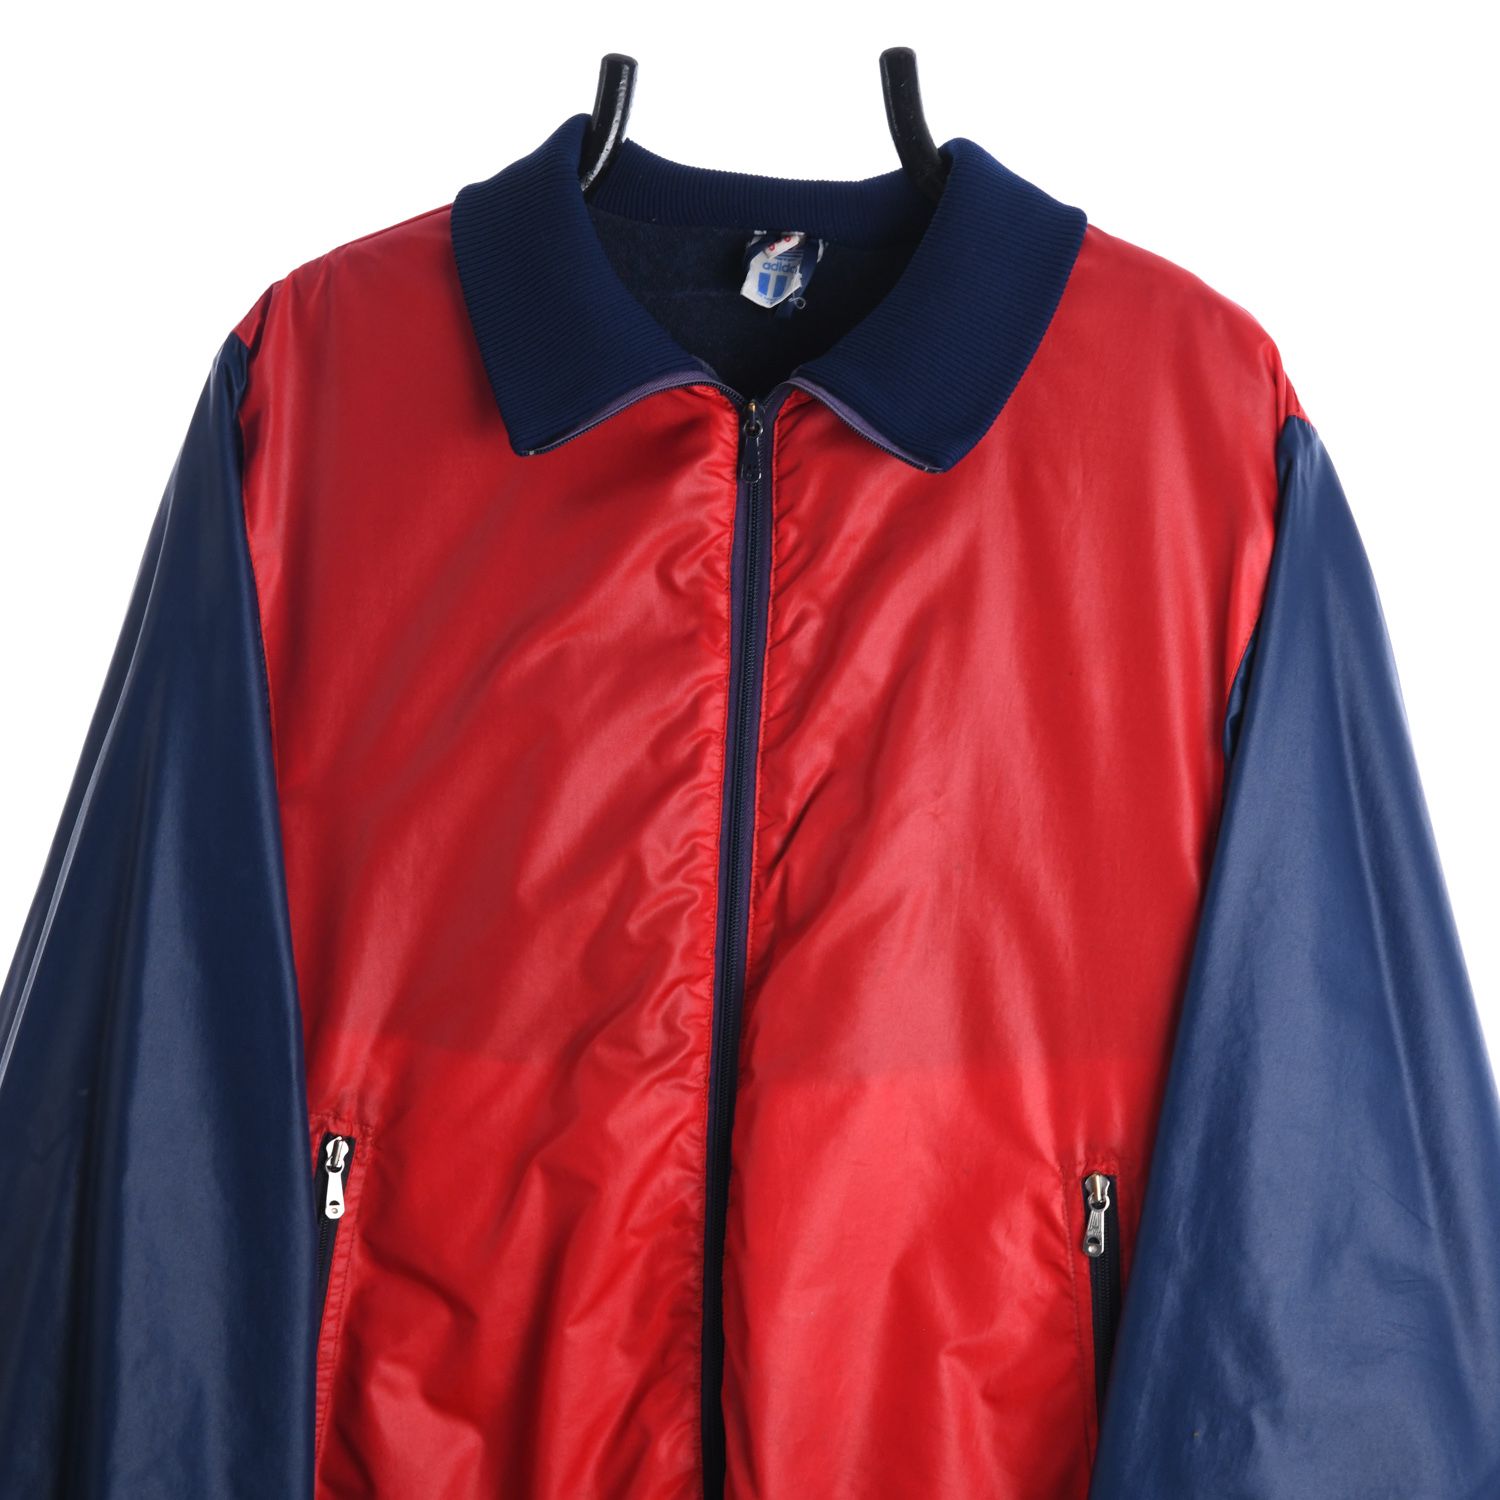 Adidas 1980s Shell Jacket